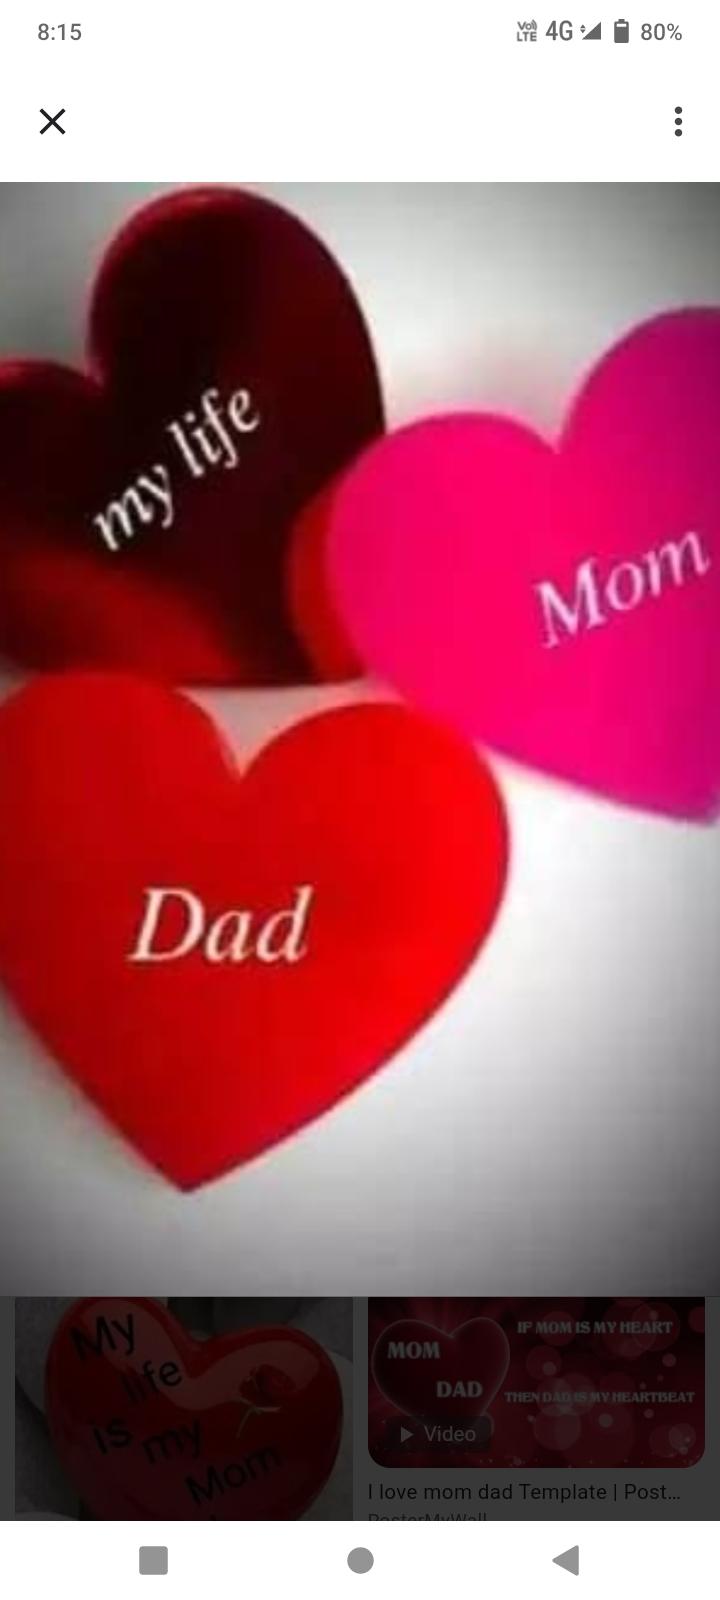 Mom Papa Xxx V - l love my family mom papa aapi bhaeðŸ˜˜ðŸ˜˜ðŸ˜˜ðŸ˜˜ðŸ˜˜ðŸ˜˜ðŸ˜˜ Images â€¢ ðŸŽ¸CG lover ðŸŽ¸  (@2663802253) on ShareChat